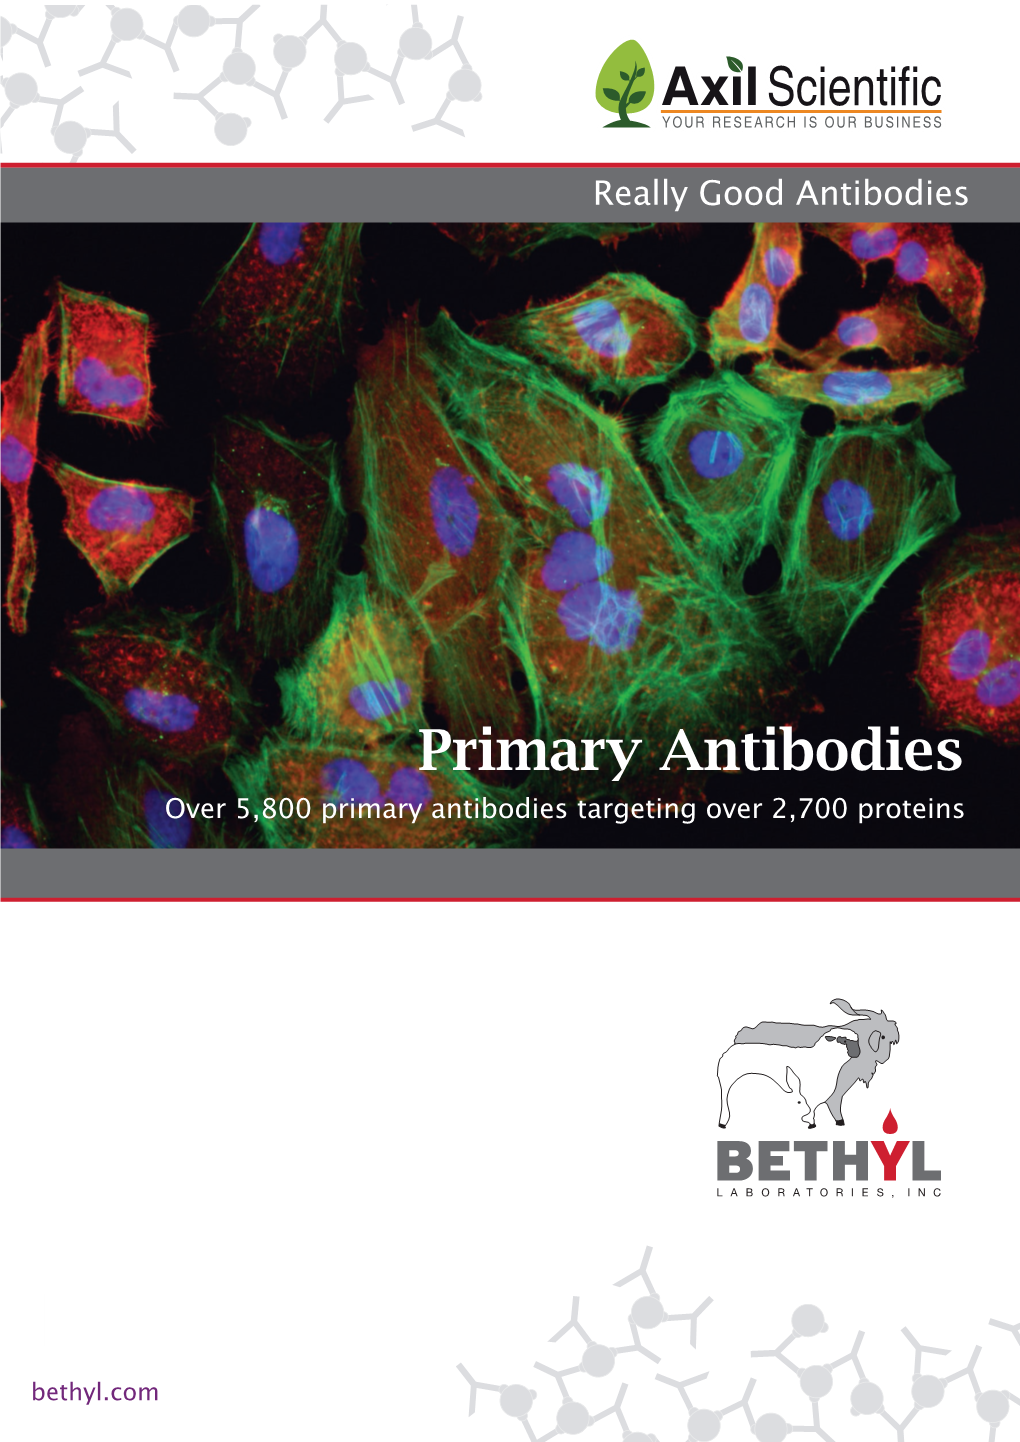 Primary Antibodies Over 5,800 Primary Antibodies Targeting Over 2,700 Proteins